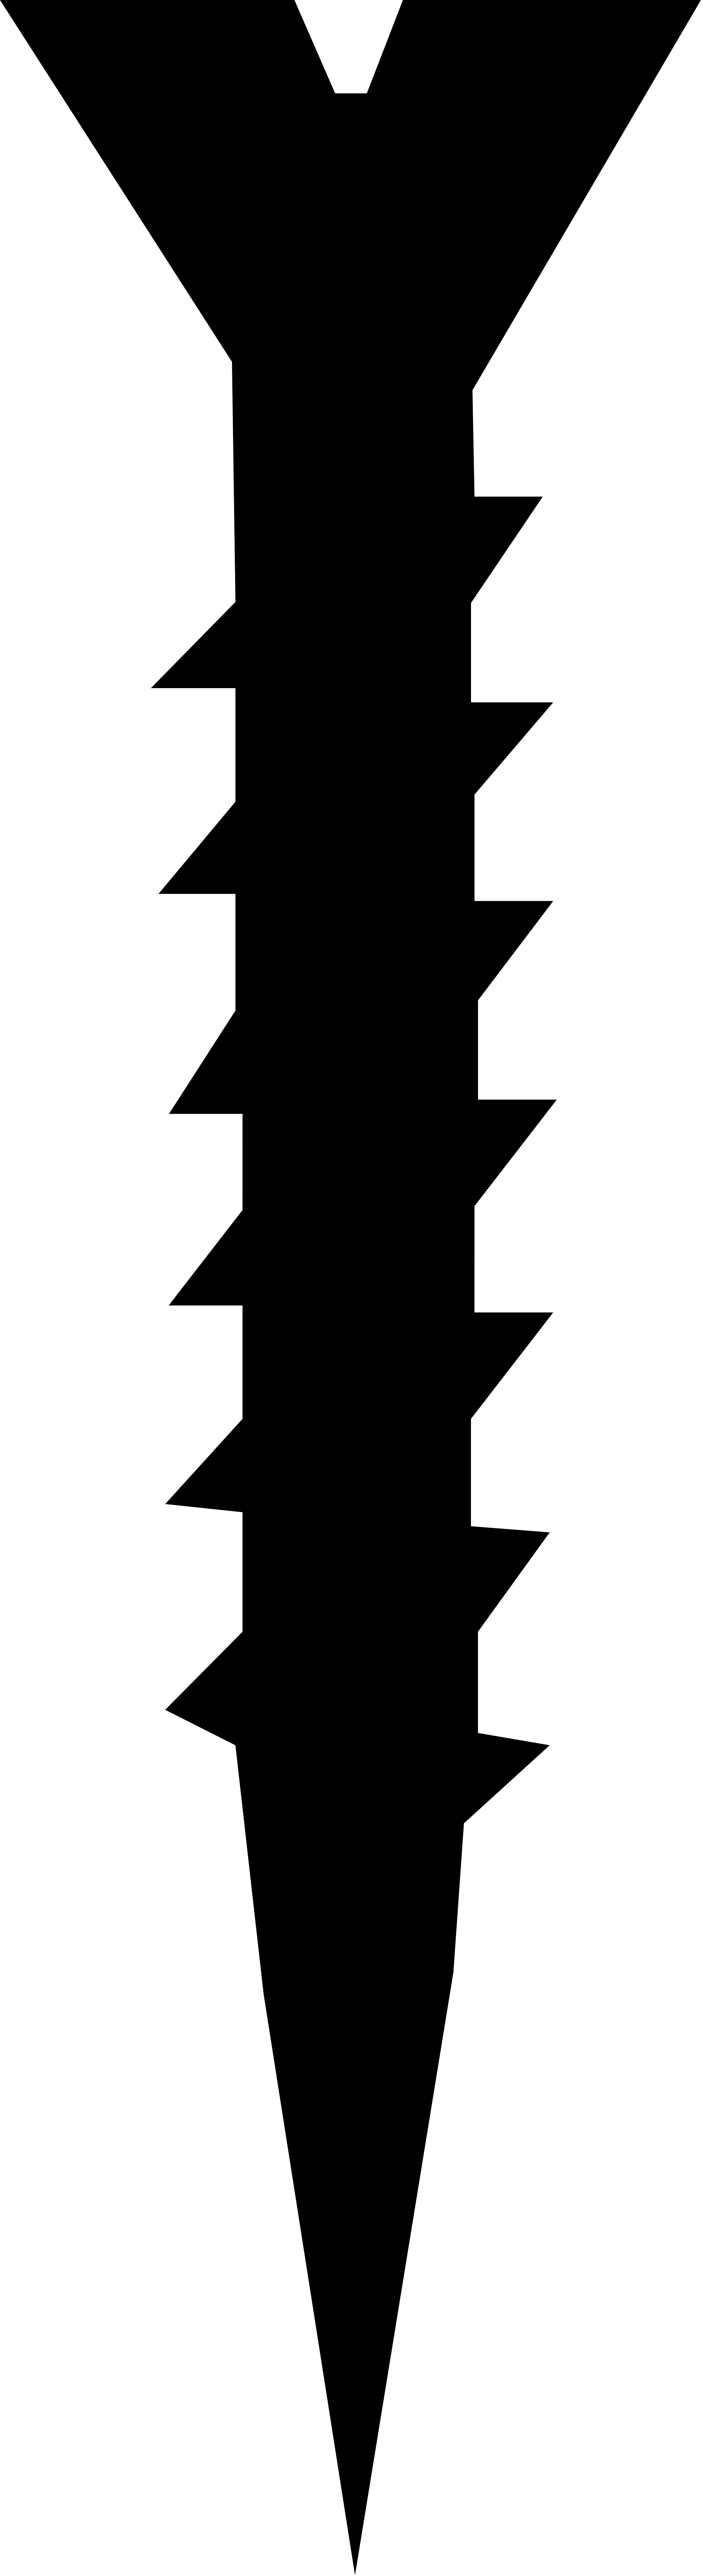 Open - Black Screw Clipart (2000x7326)